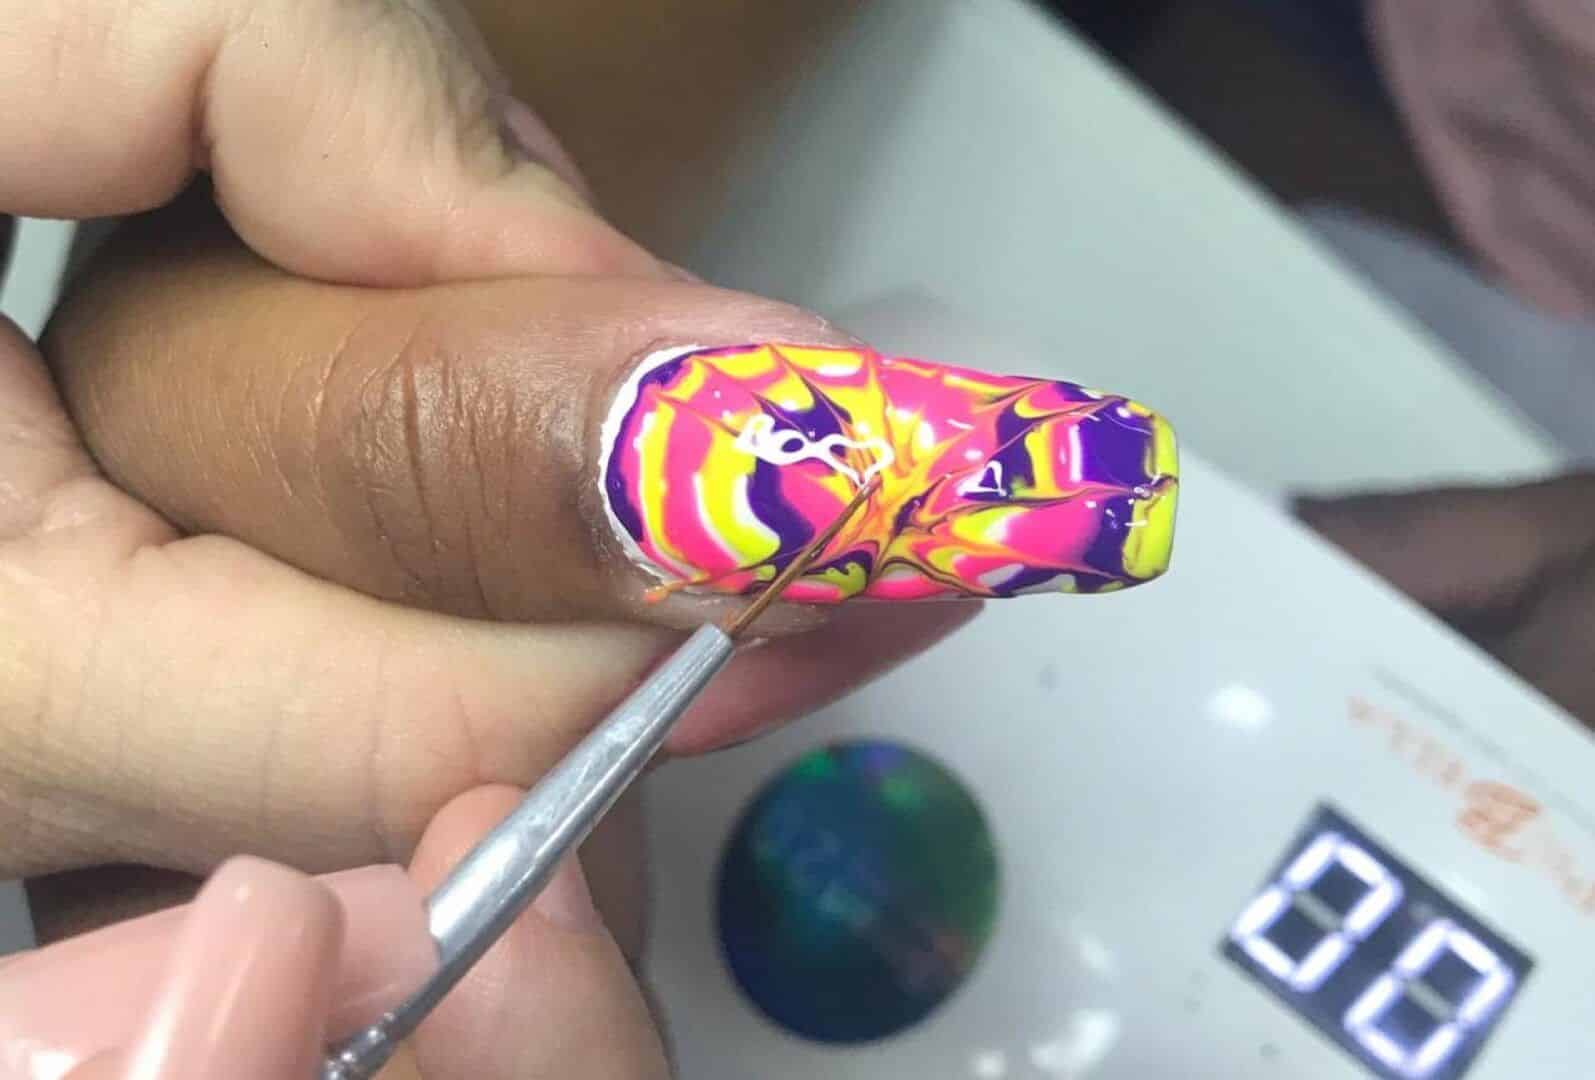 Unhas tie-dye: manicure das famosas ensina a fazer nail art